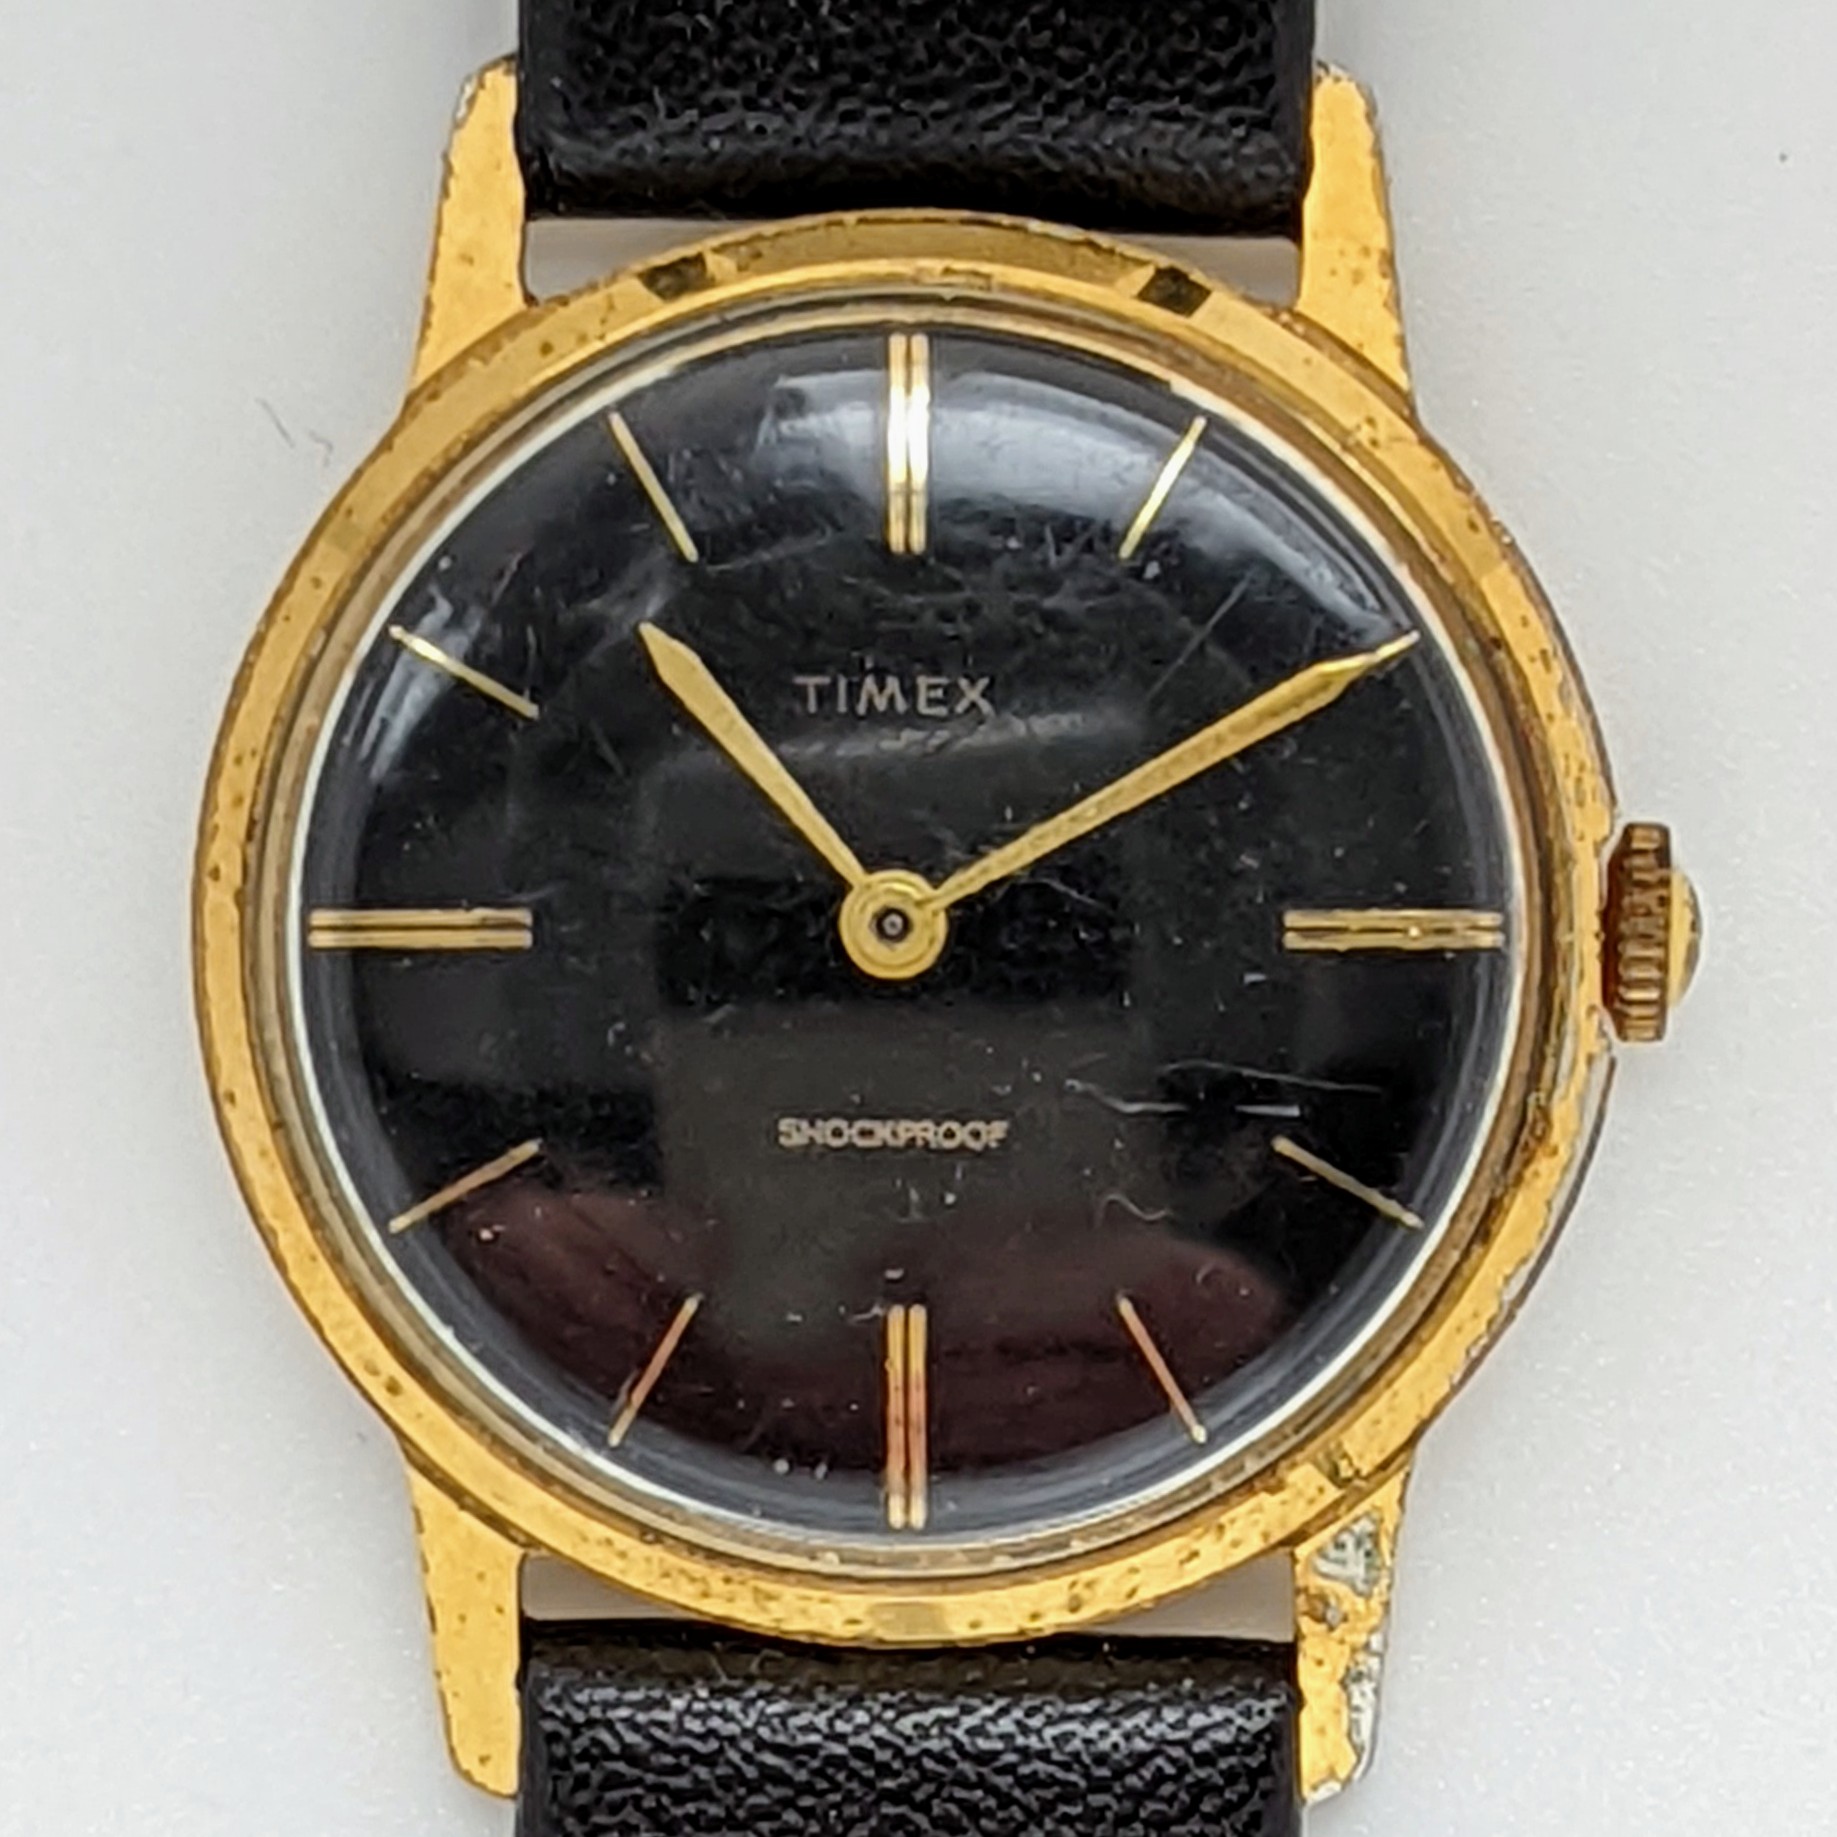 Timex Mercury 1048 2468 [1968]